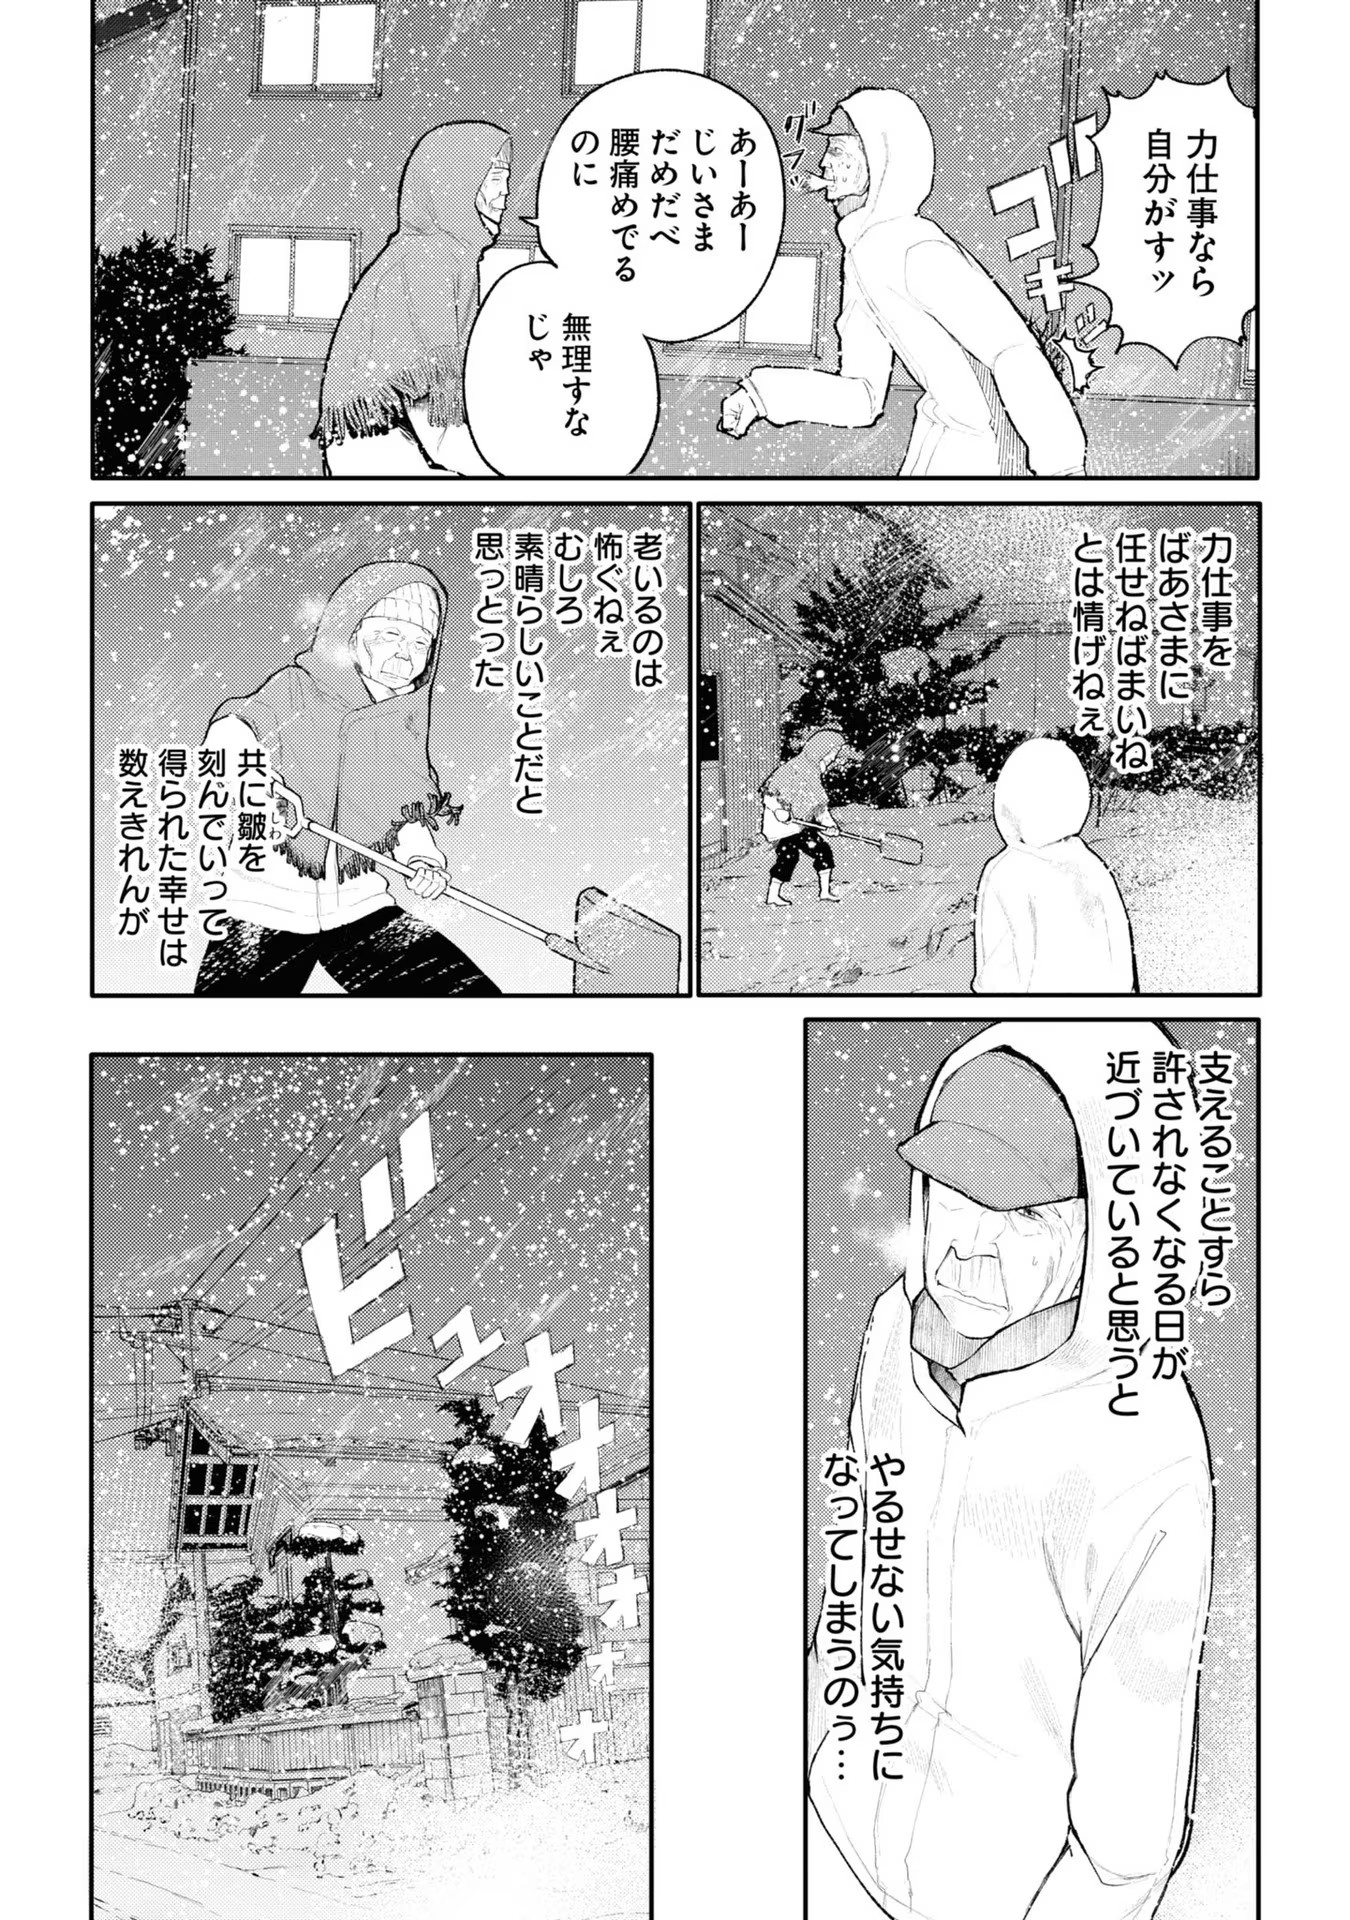 Ojii-san to Obaa-san ga Wakigaetta Hanashi - Chapter 14 - Page 2